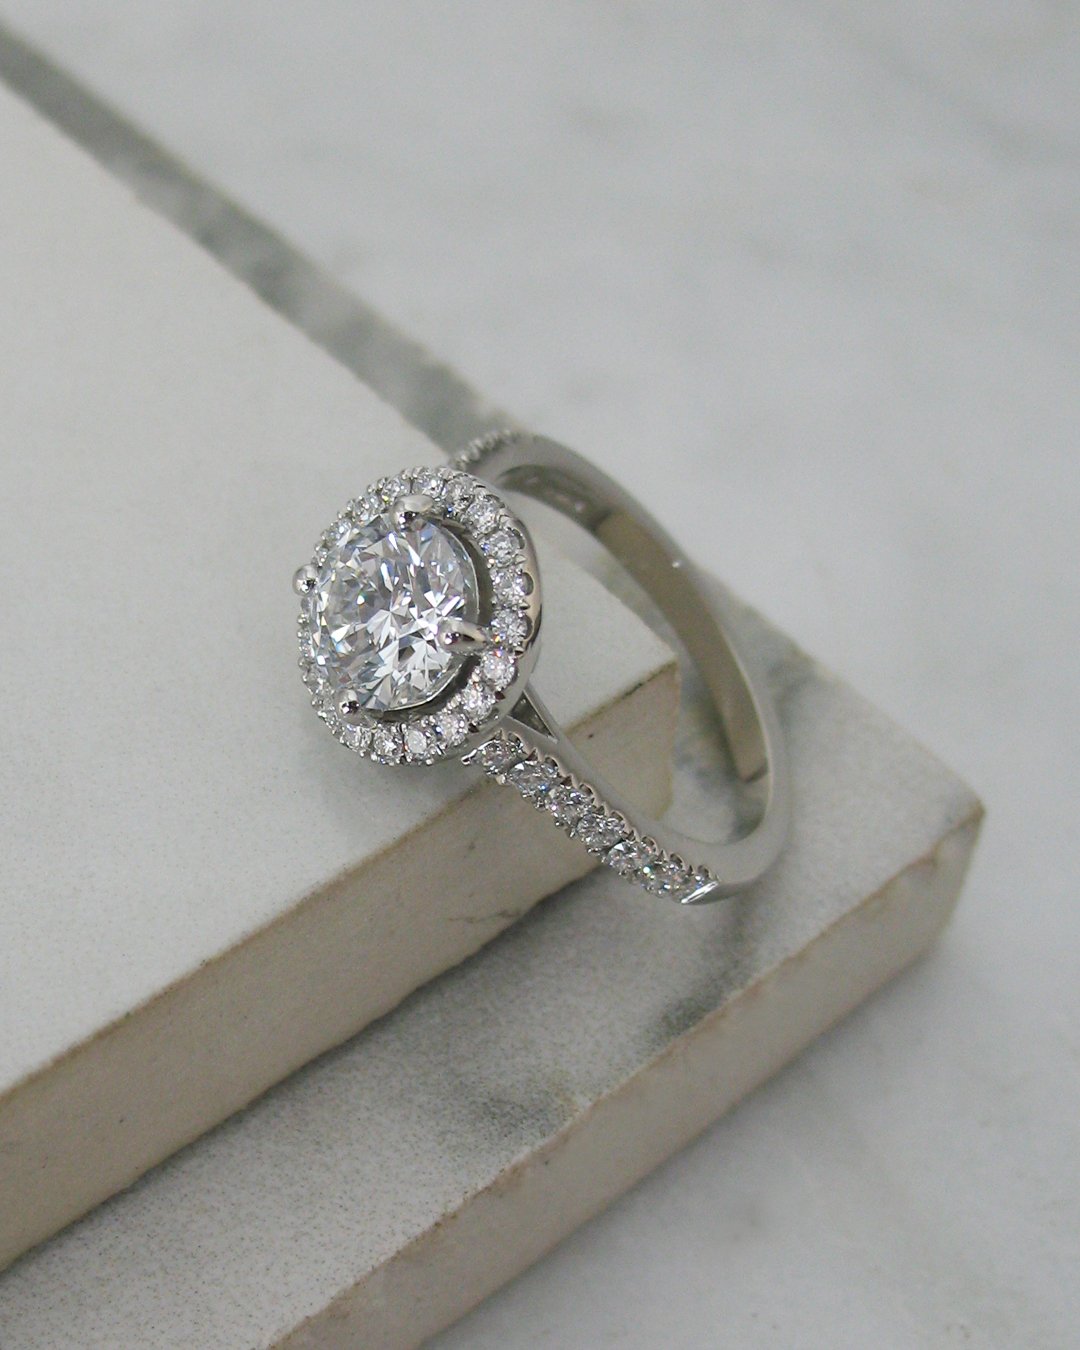 A bespoke Art Deco diamond engagement ring